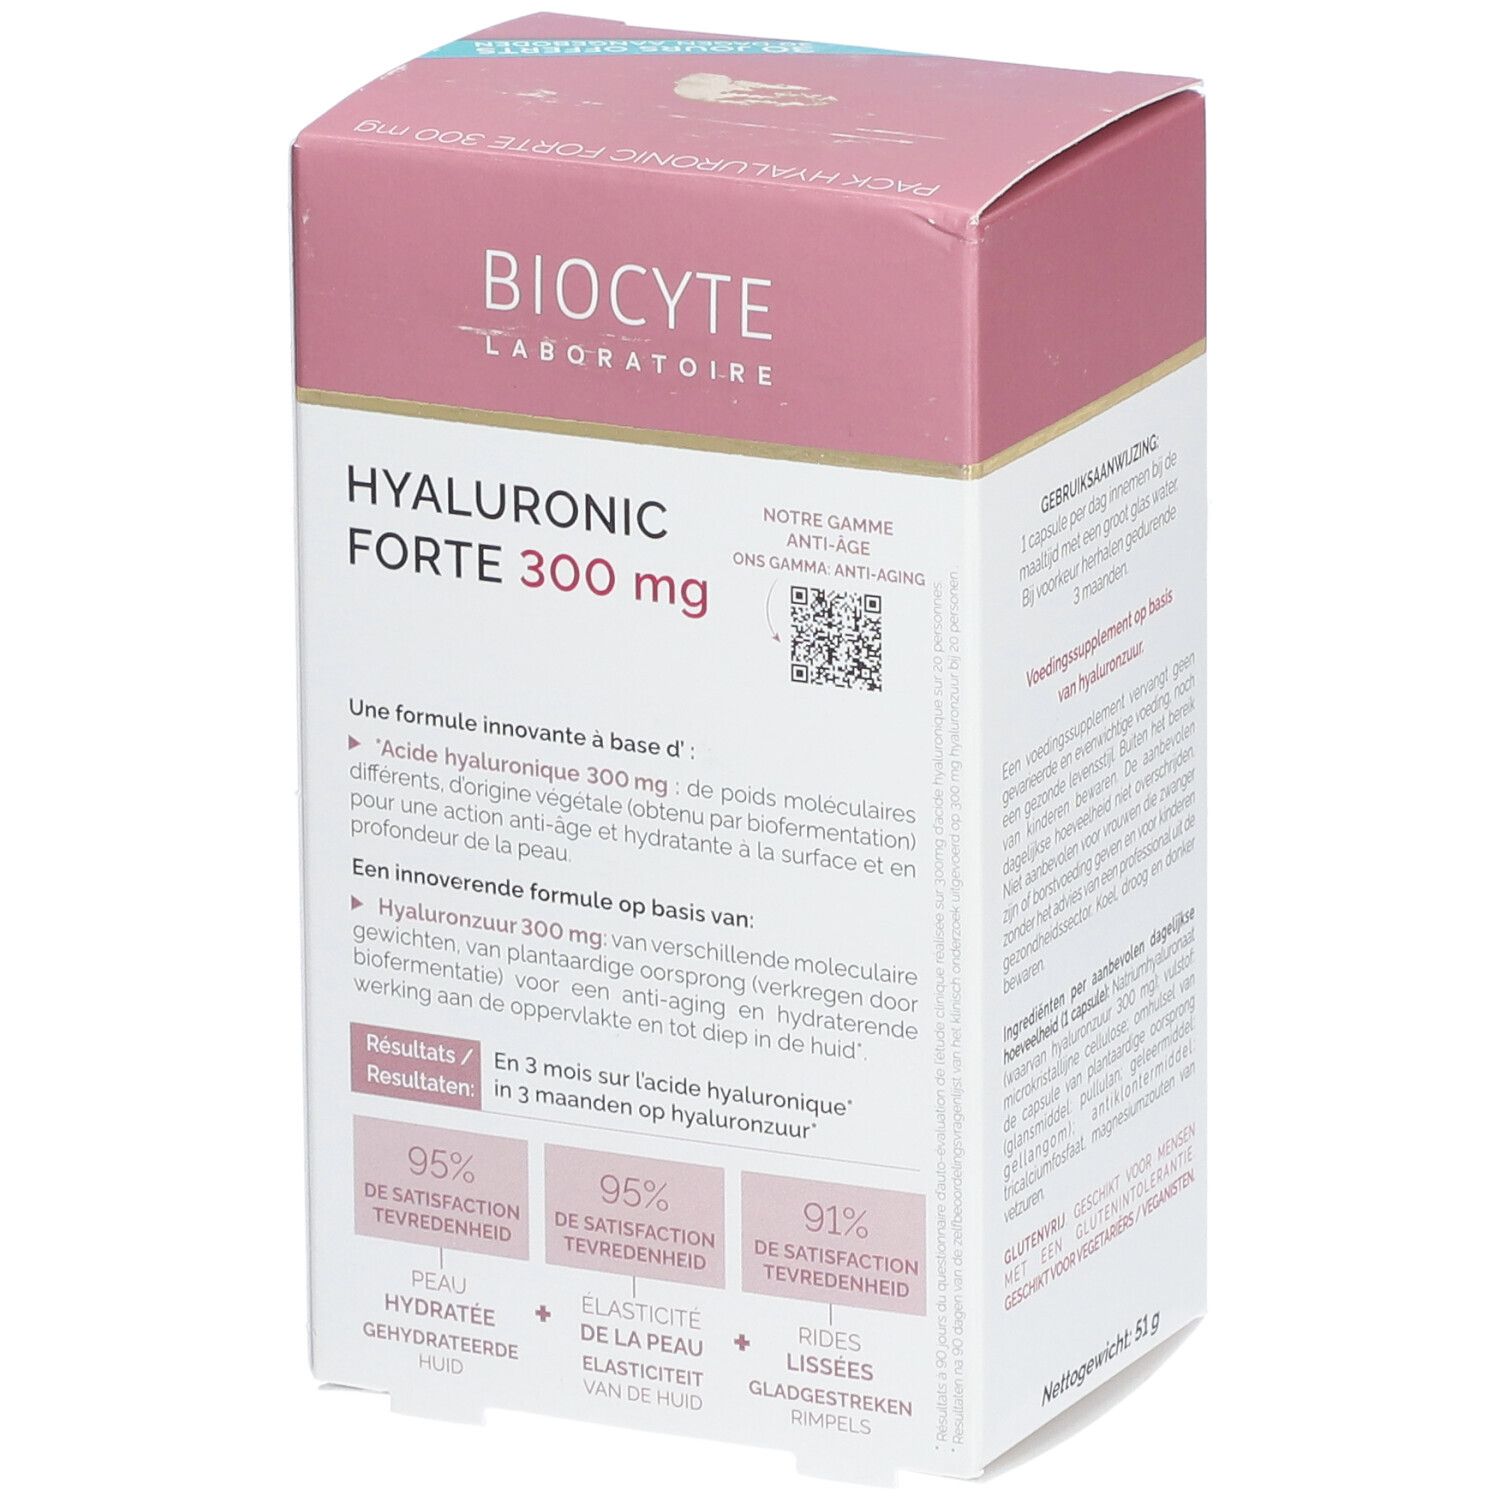 Biocyte Hyaluronic Forte 300 mg